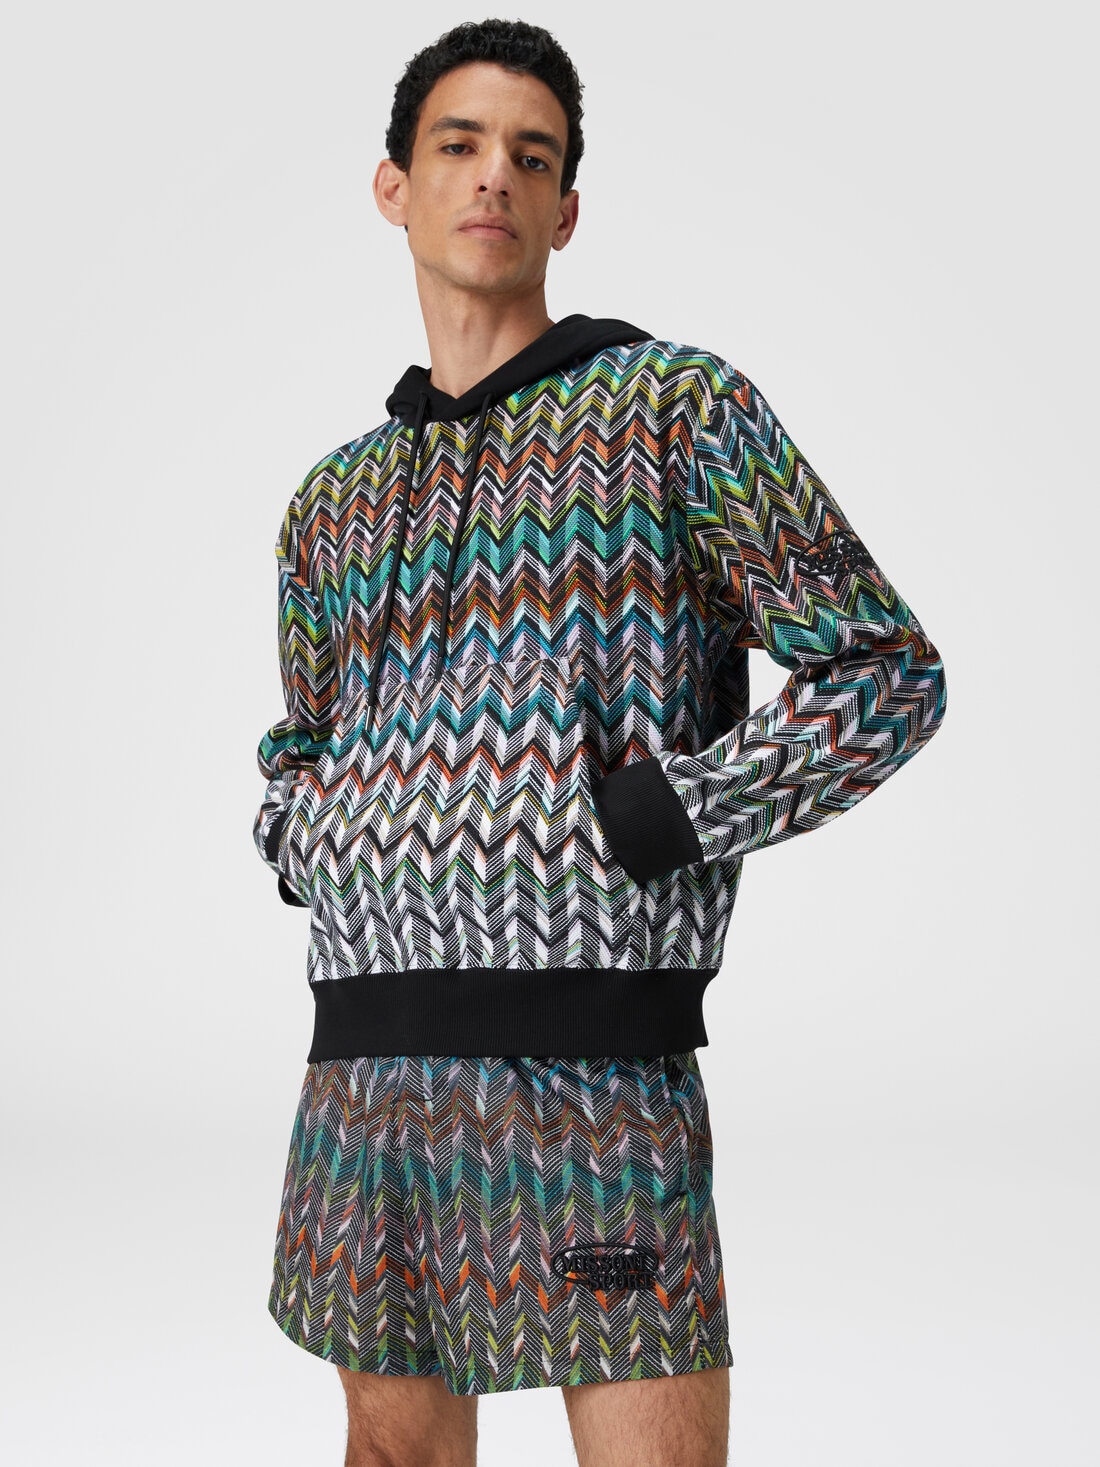 Hooded sweatshirt in zigzag knit , Multicoloured  - TS24SW05BC0047S91J3 - 3